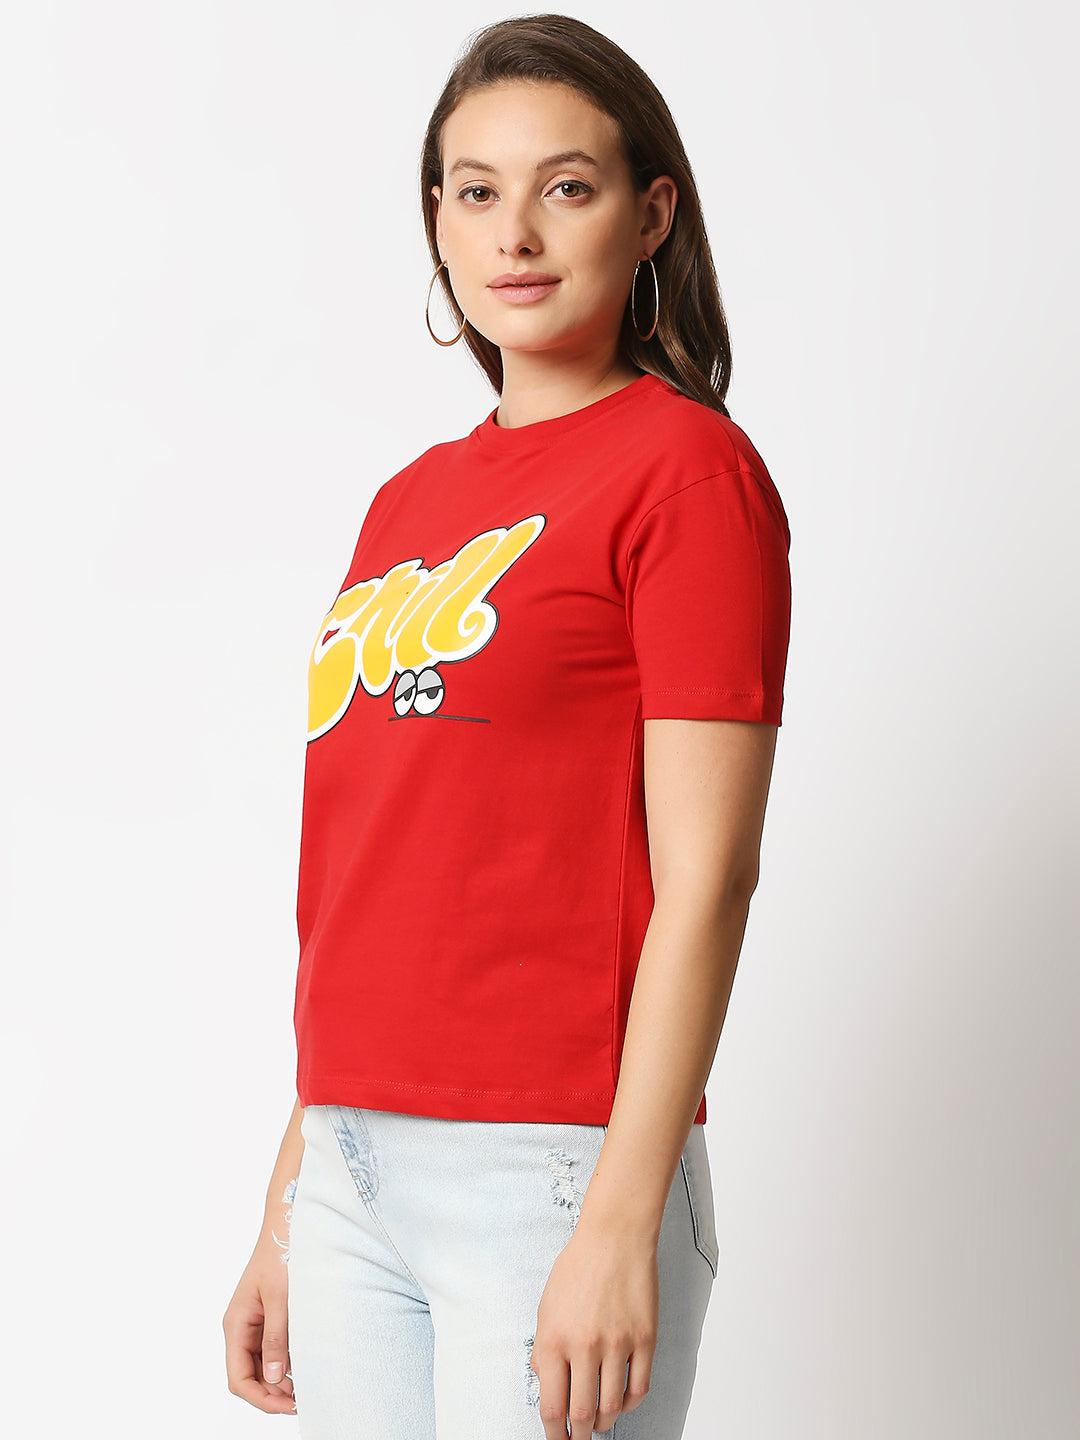 Buy Womenâ€™s Cherry Red Comfort fit Chest print T-shirt.